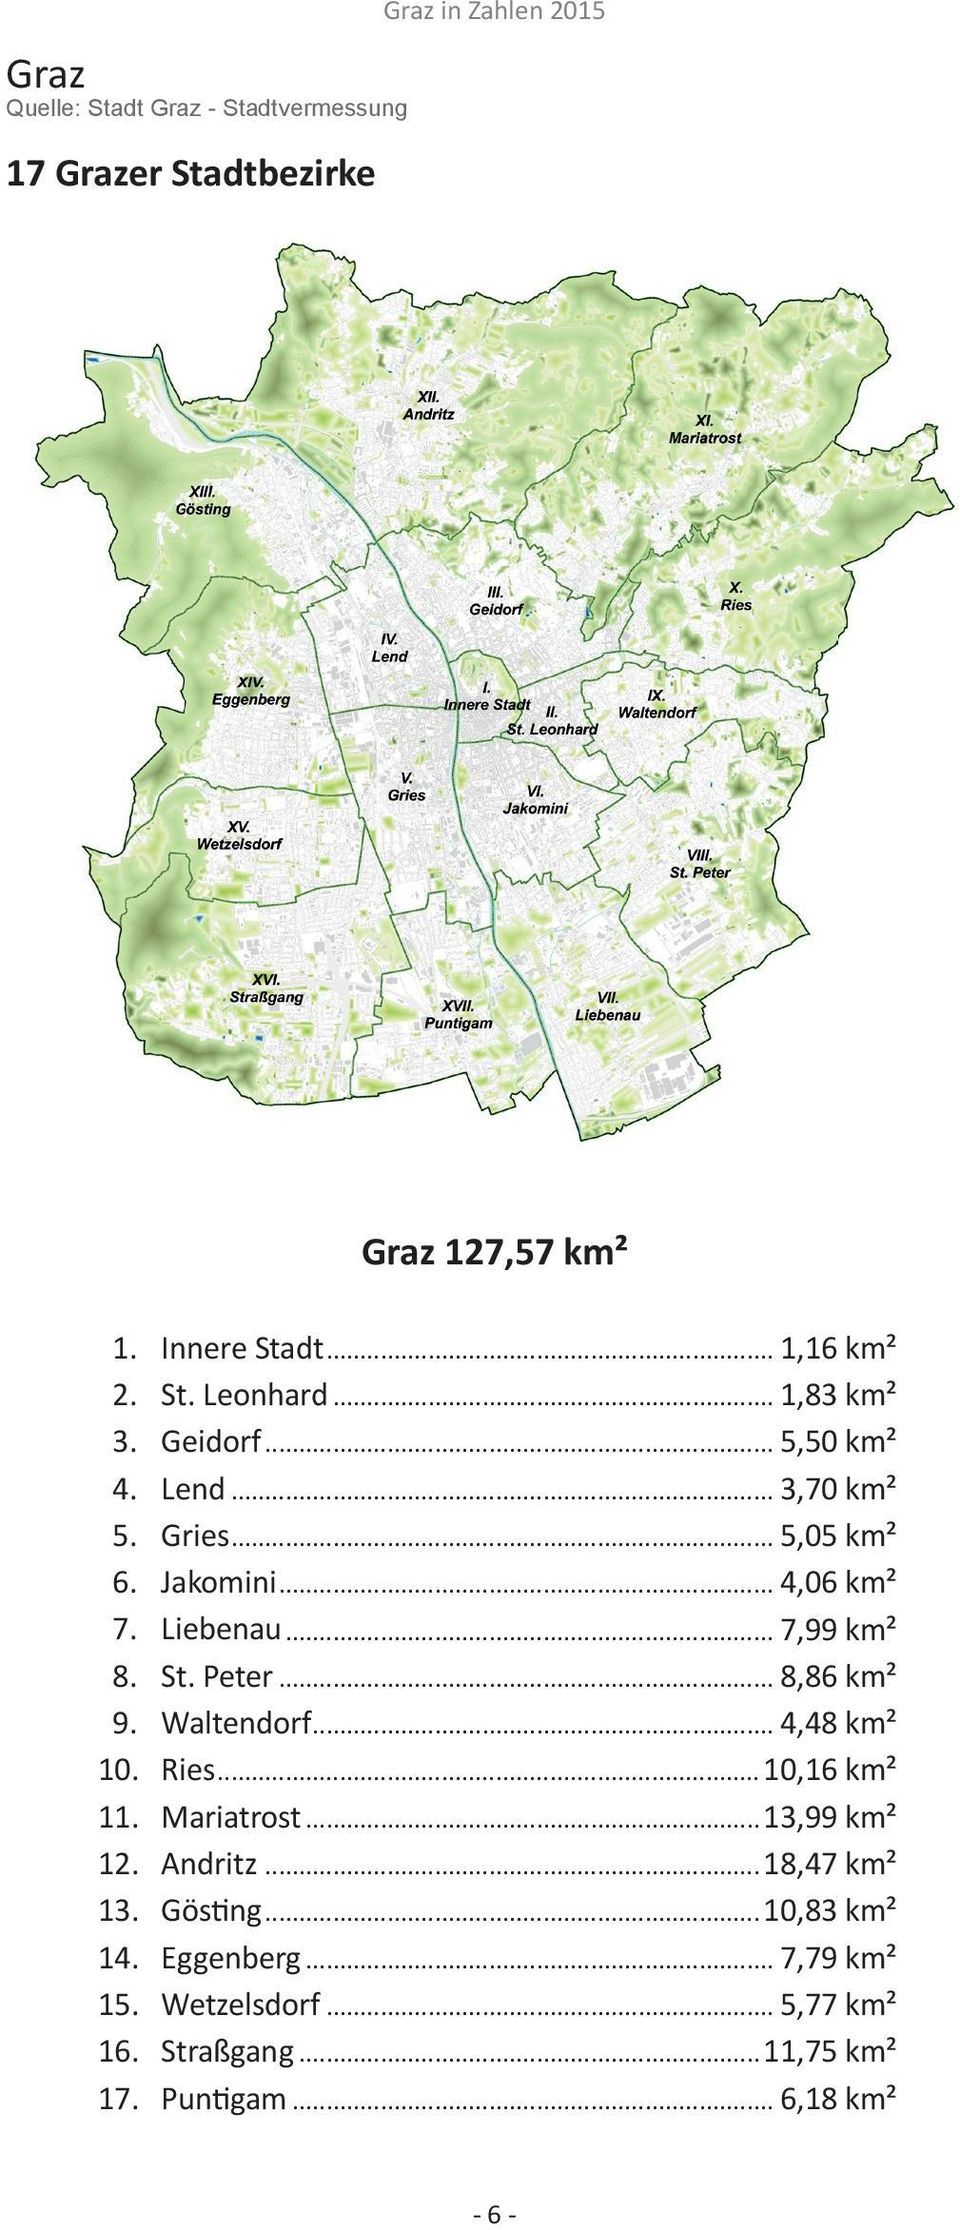 .. 7,99 km² 8. St. Peter... 8,86 km² 9. Waltendorf... 4,48 km² 10. Ries...10,16 km² 11. Mariatrost...13,99 km² 12. Andritz.